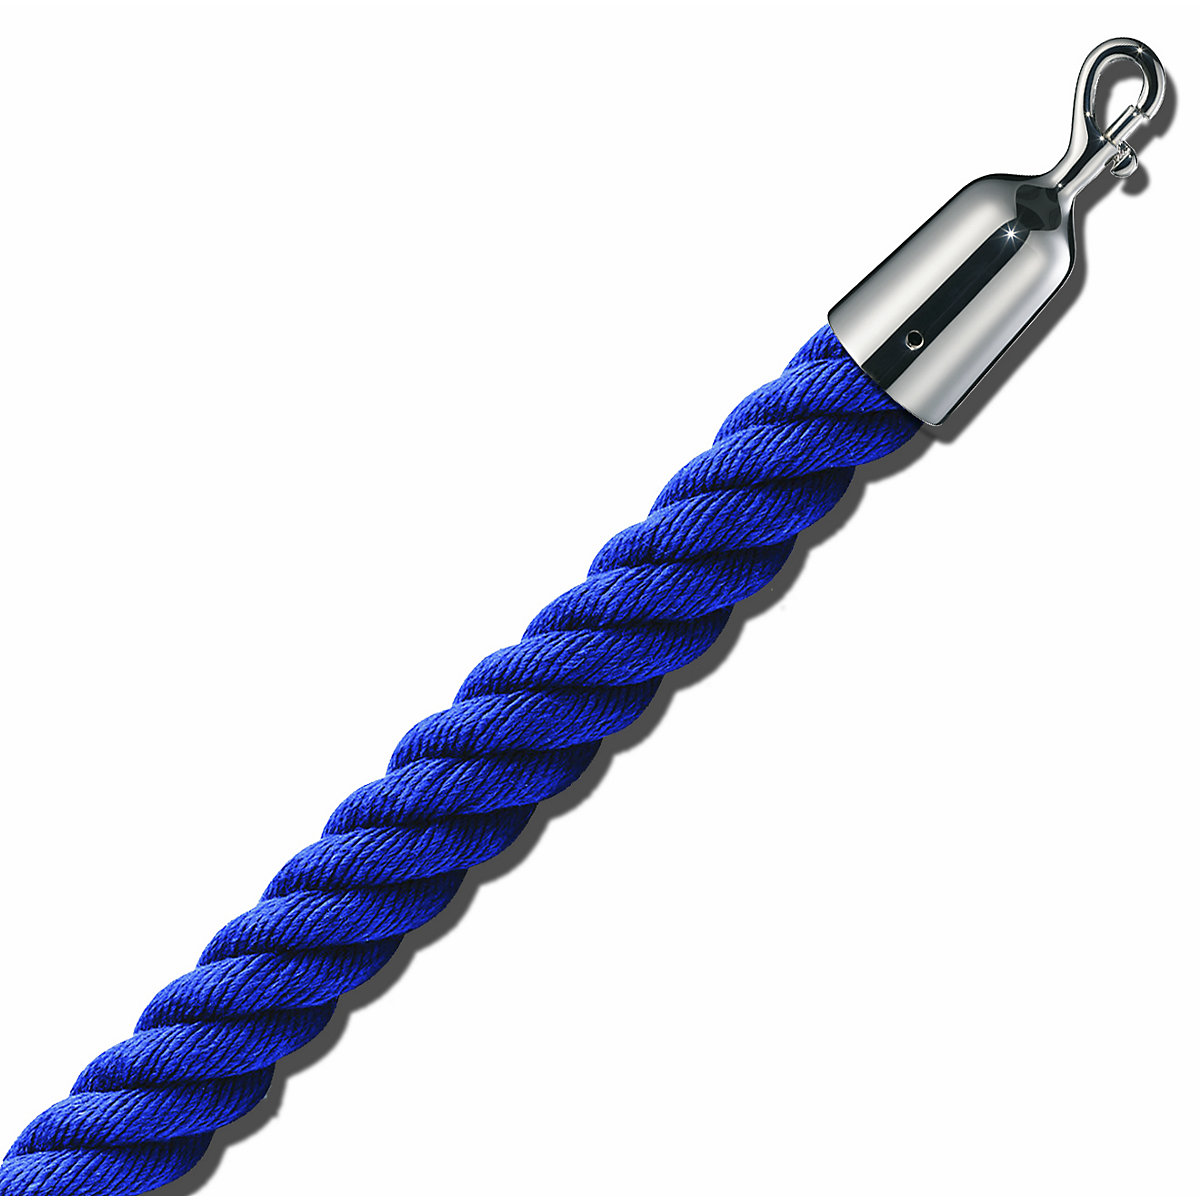 Barrier cord 1.5 m, chrome end caps, blue cord-5